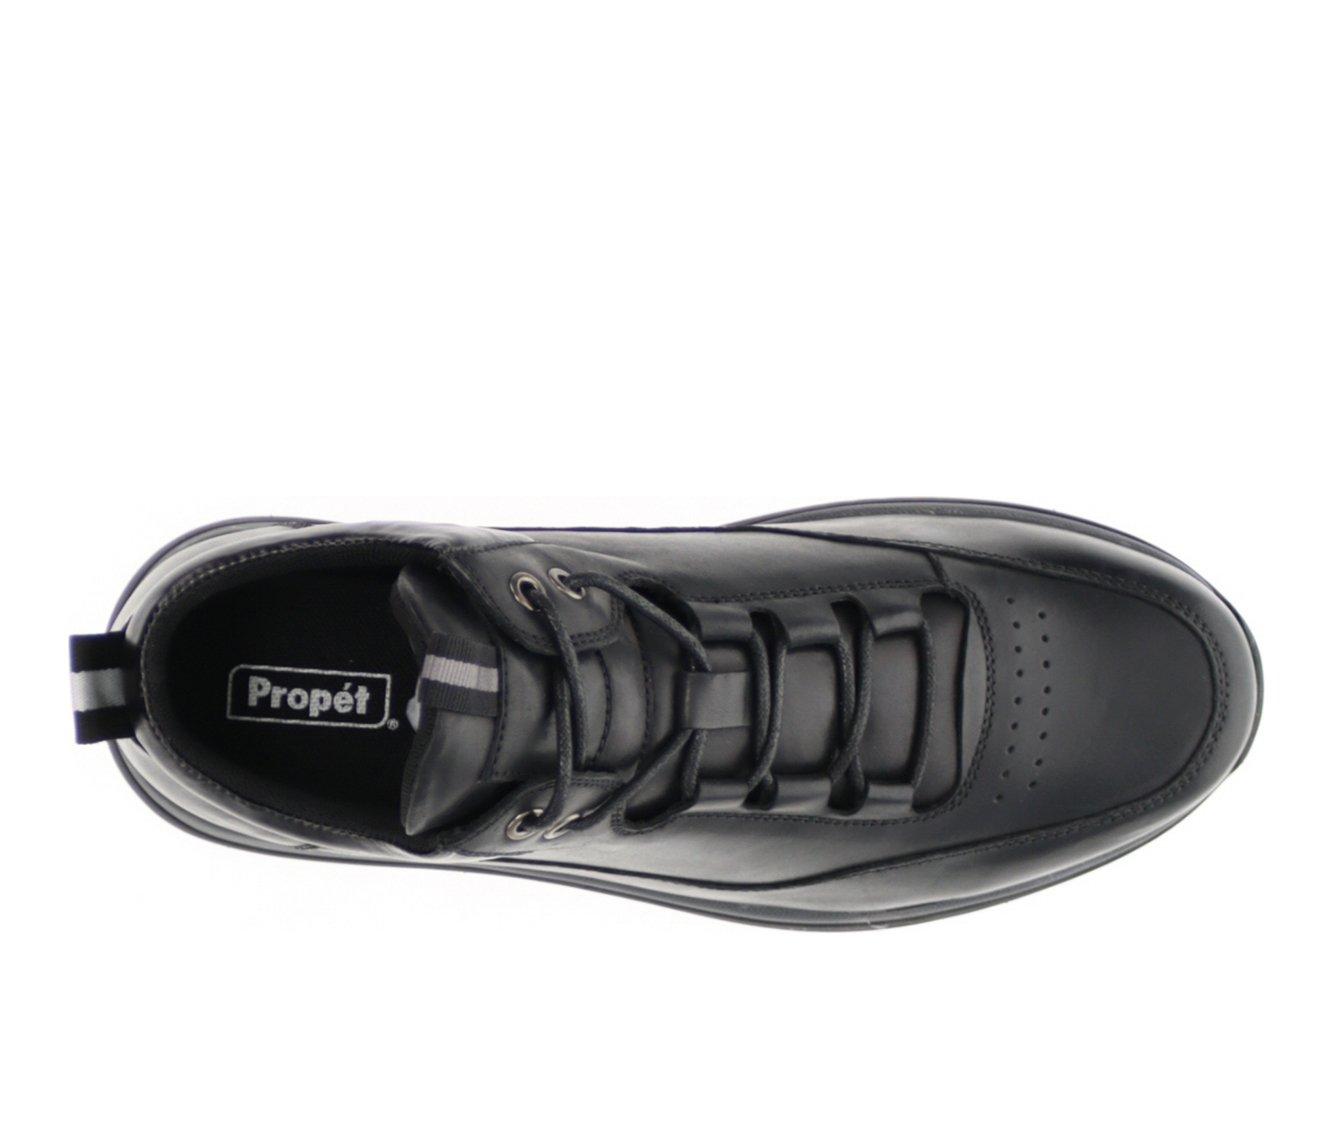 Men's Propet Pax Sneaker Boots